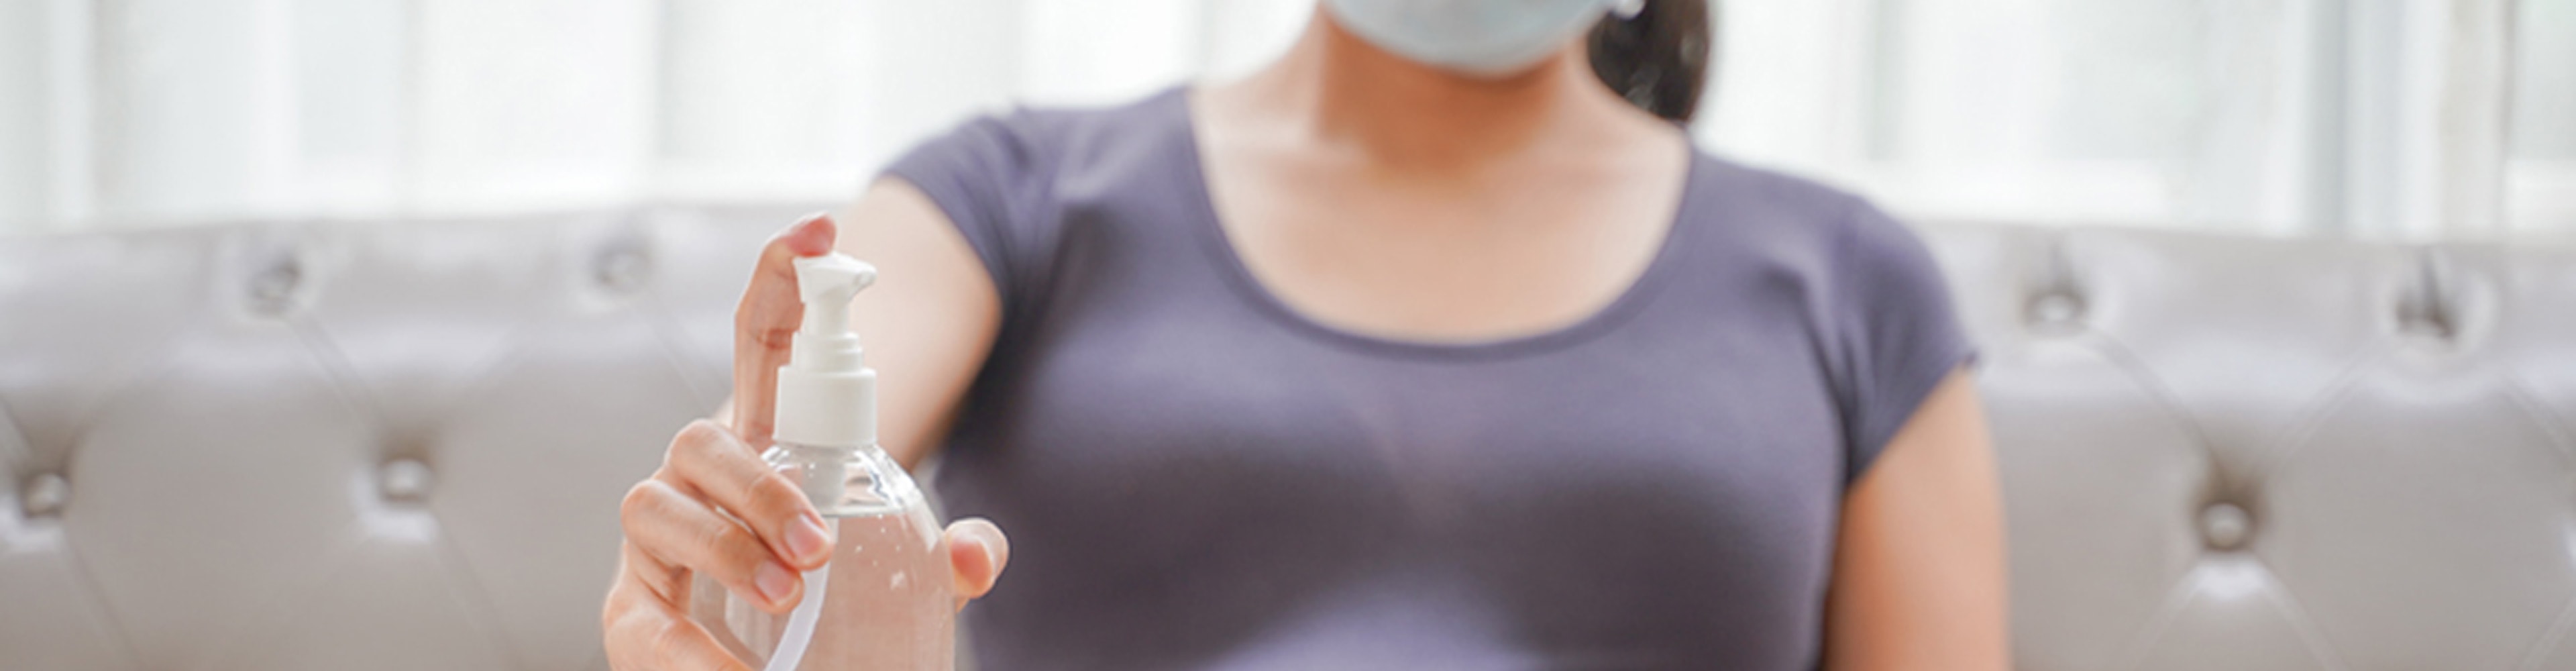 Coronavirus: Bin ich als Schwangere besonders gefährdet?